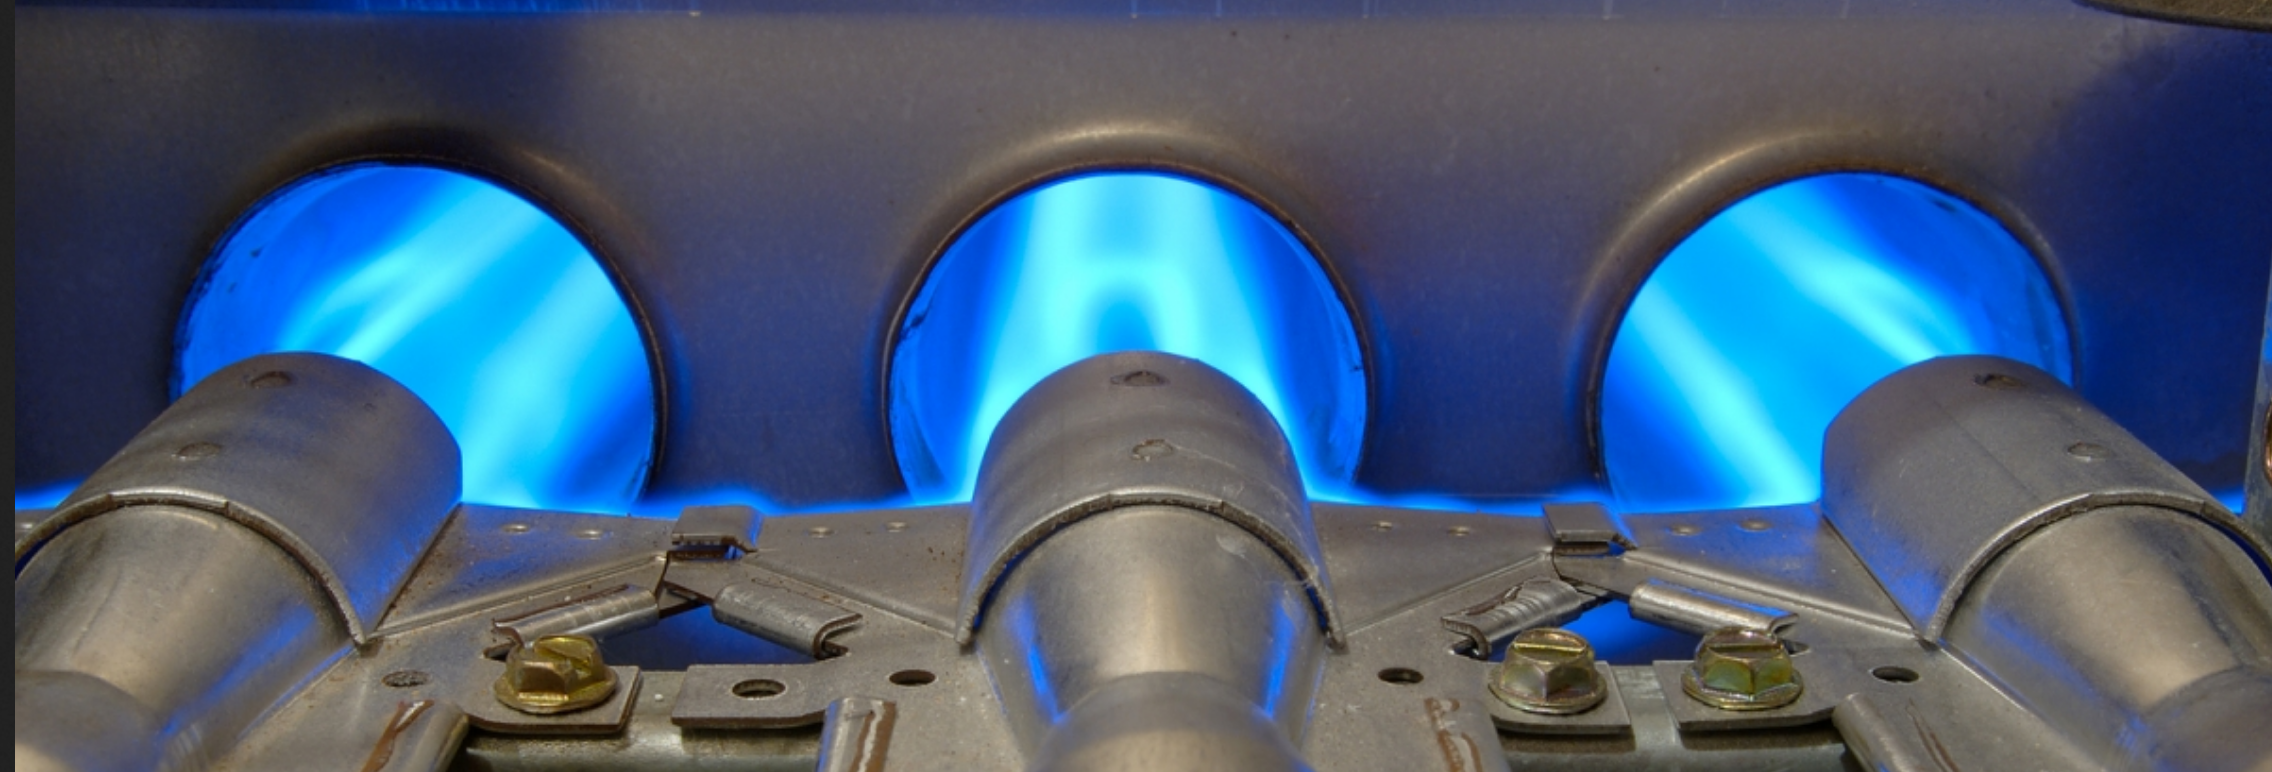 Furnace for steam heat фото 77